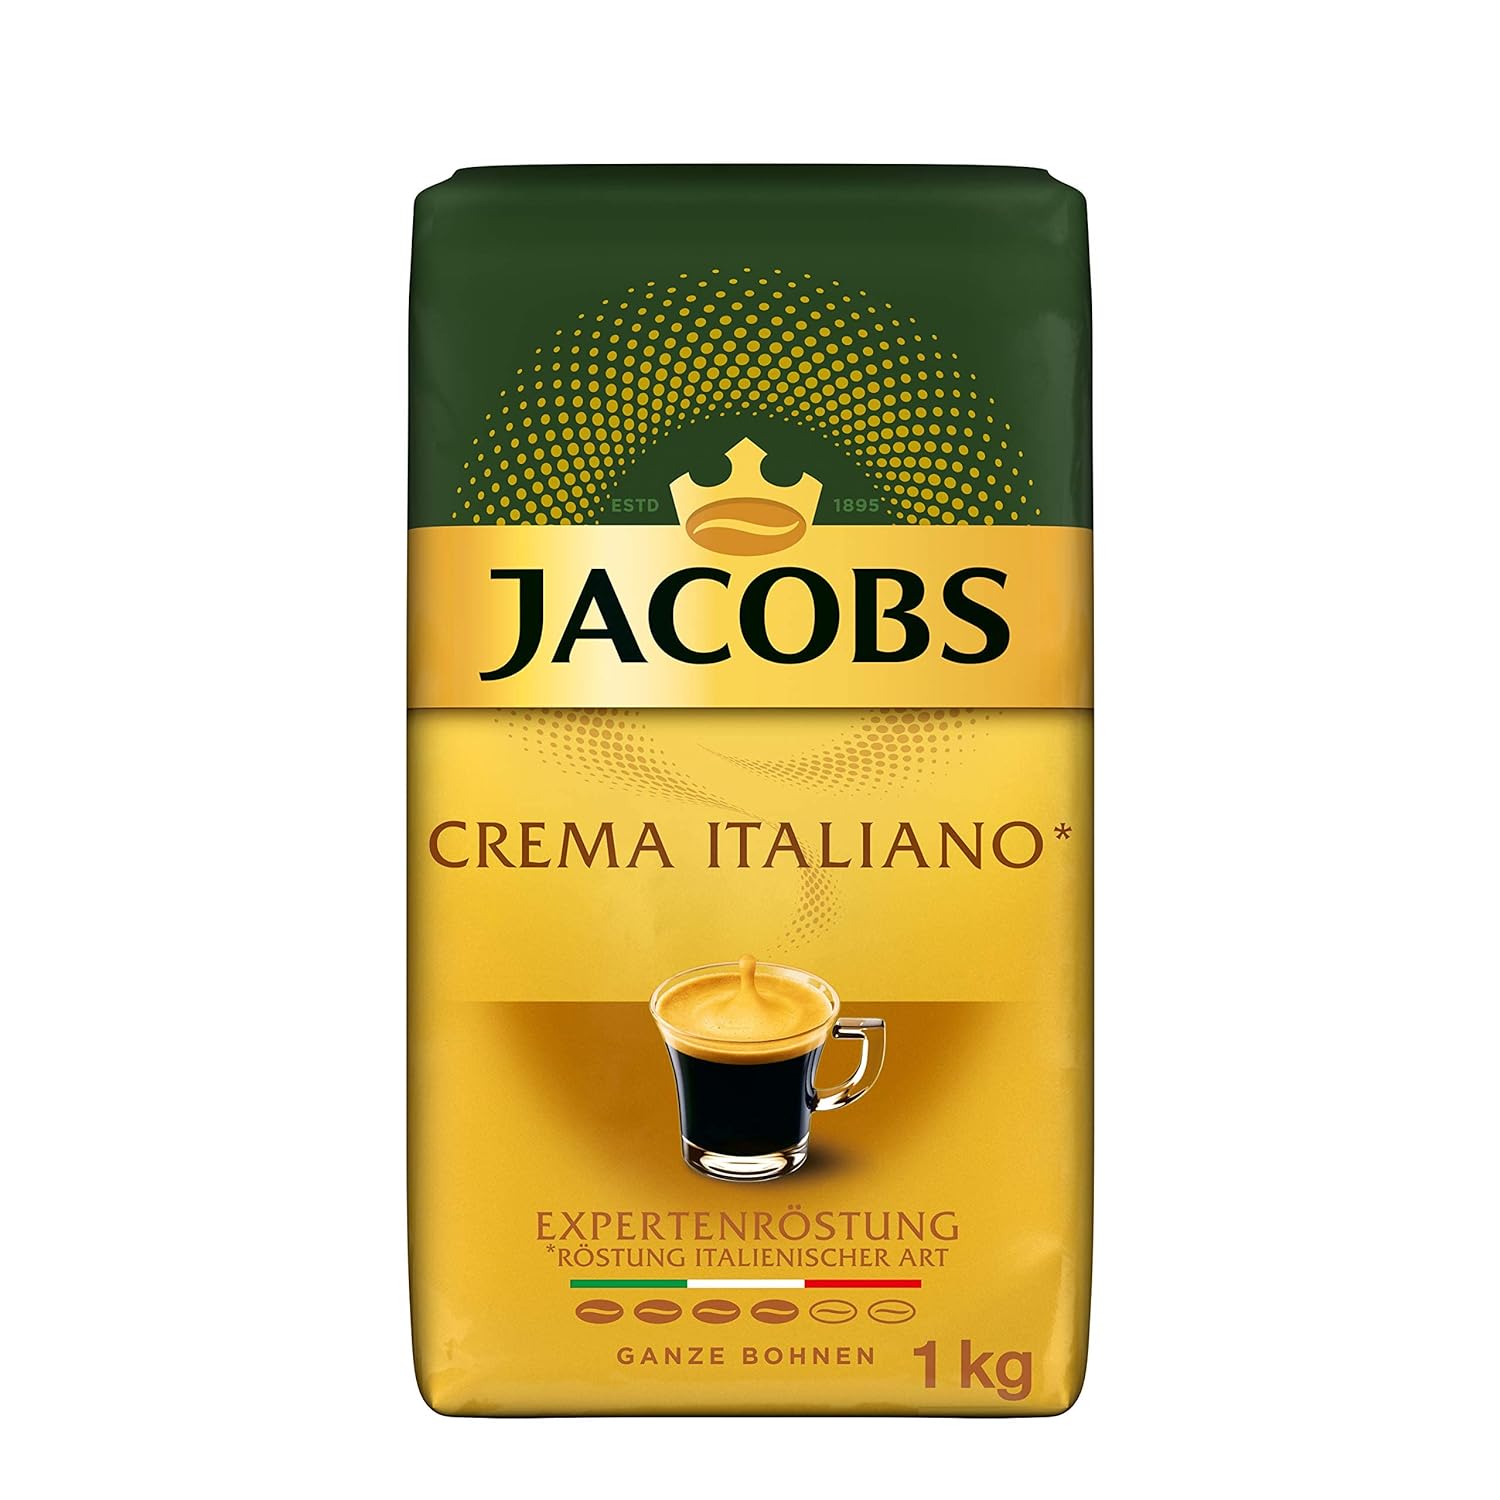 Jacobs Crema Intego Coffee Beans Expert Roasting 1 KG Bean Coffee